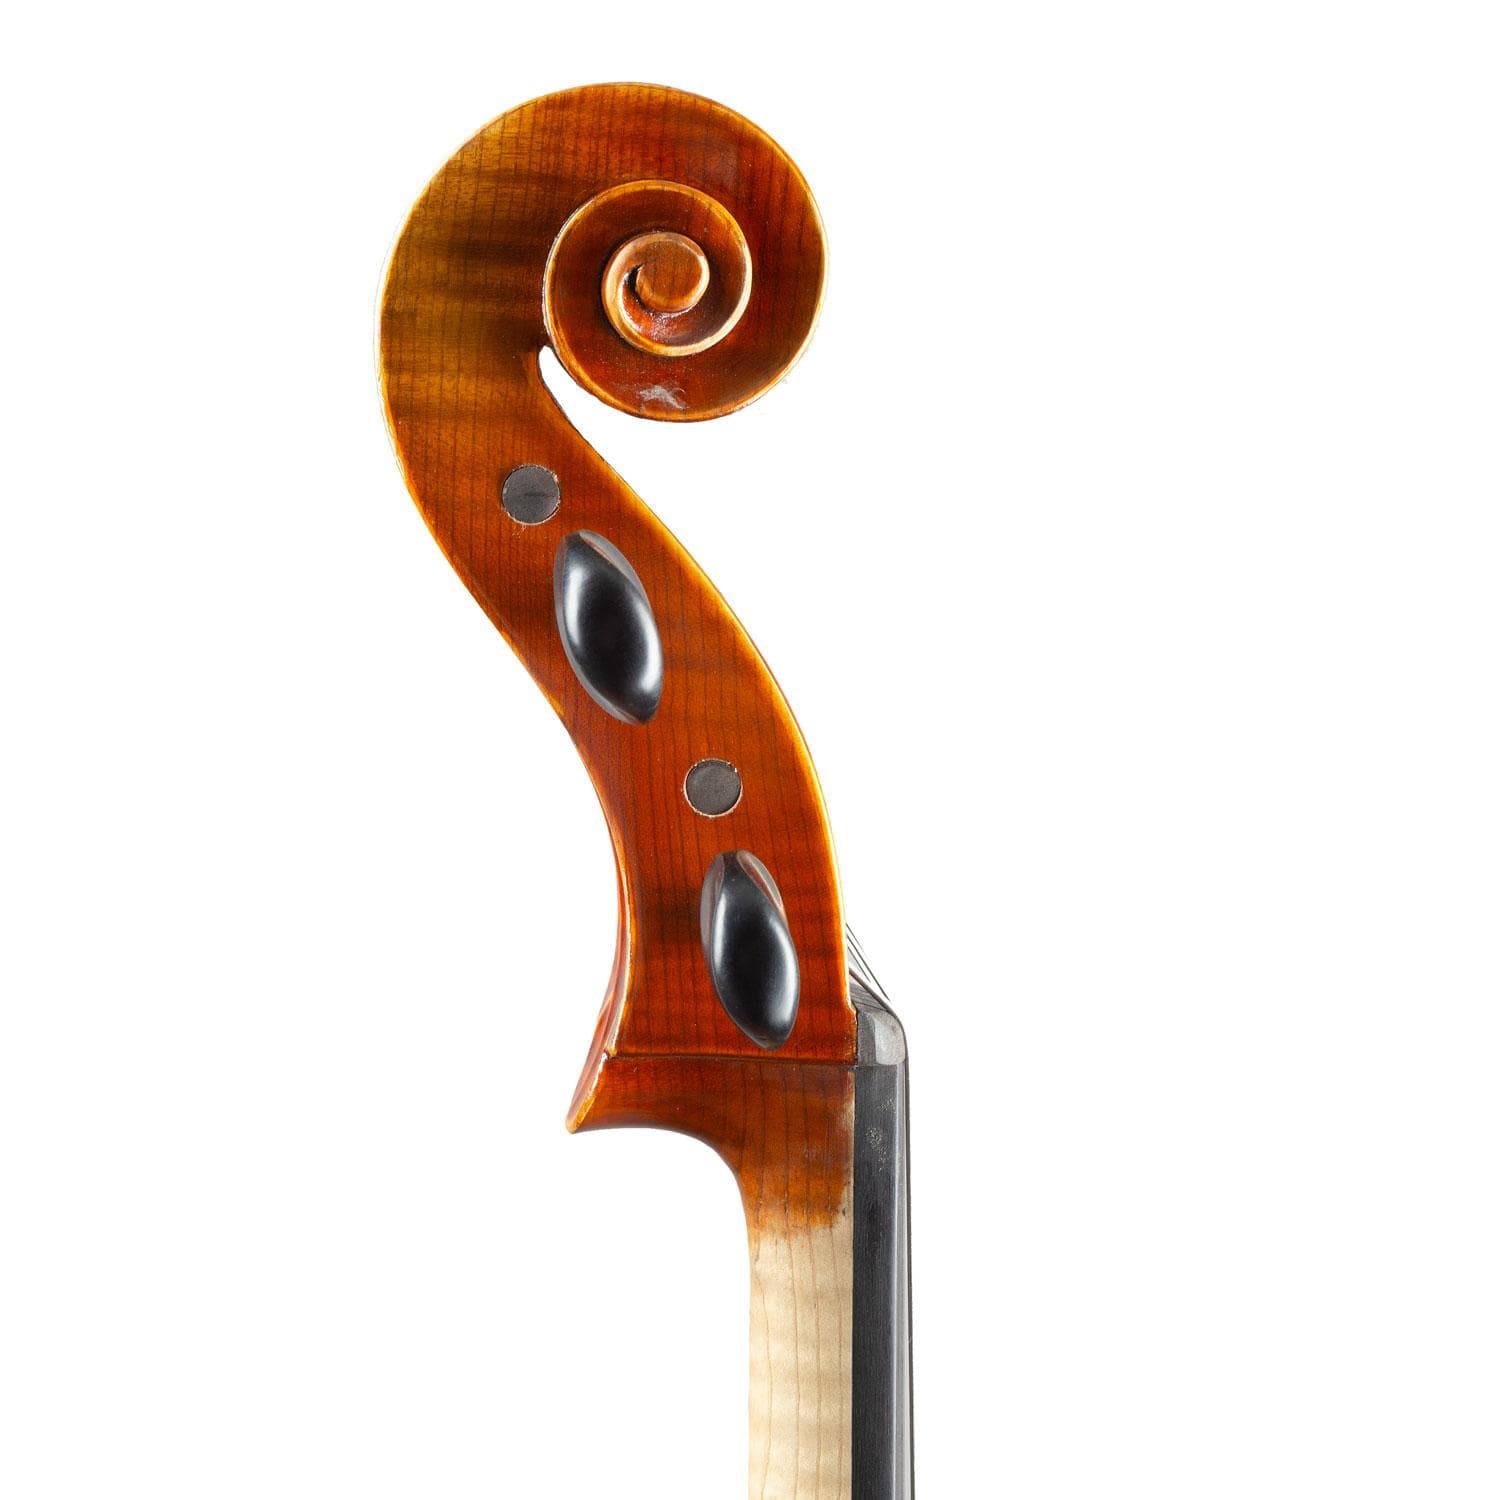 Franz Hoffmann™ Concert Cello - Instrument Only